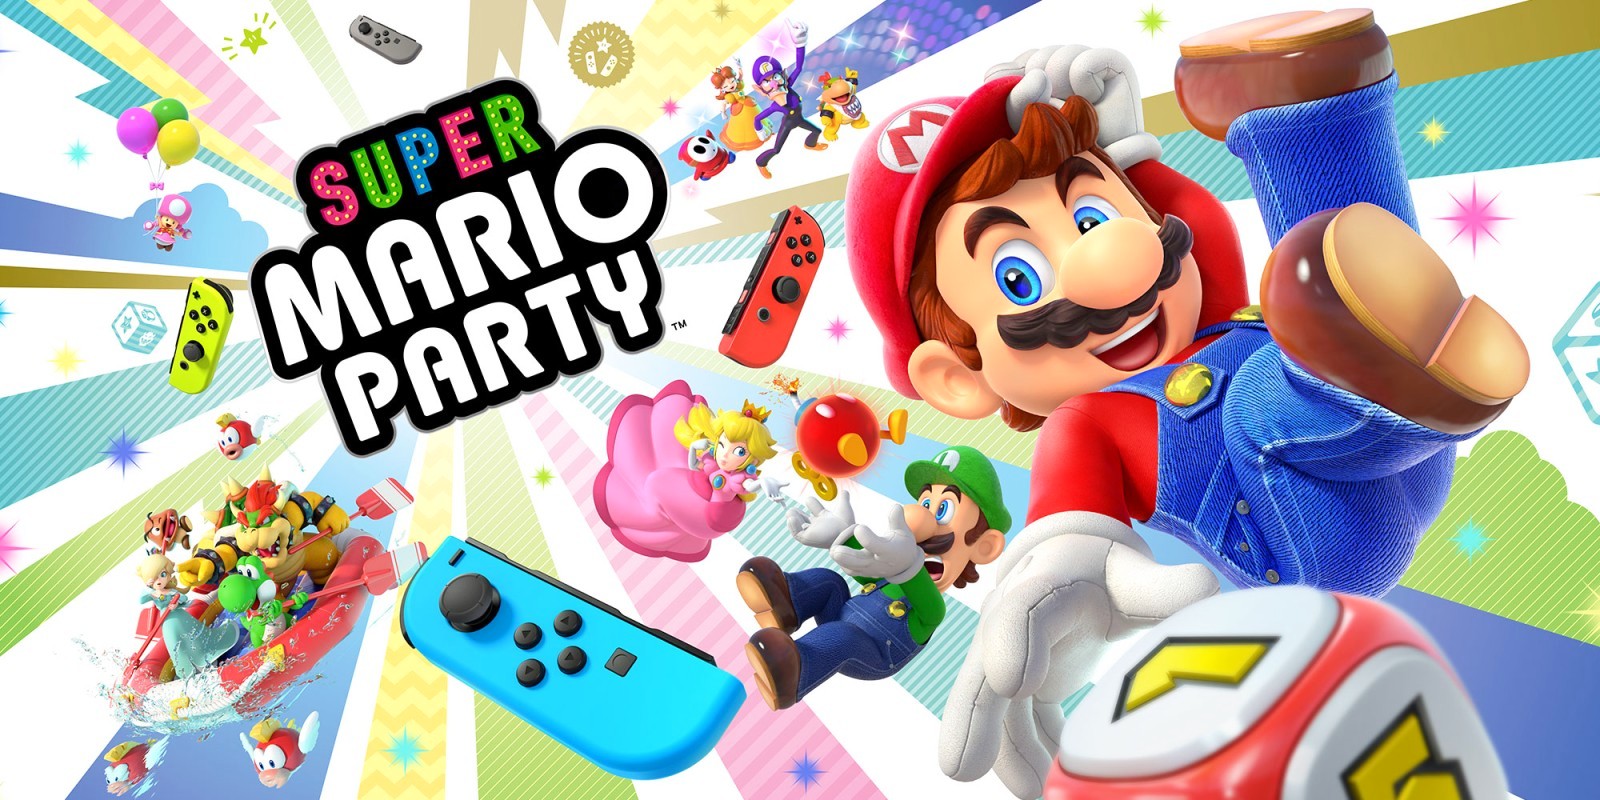 <img src="super.jpg" alt="super mario party fun virtual game night"/> 